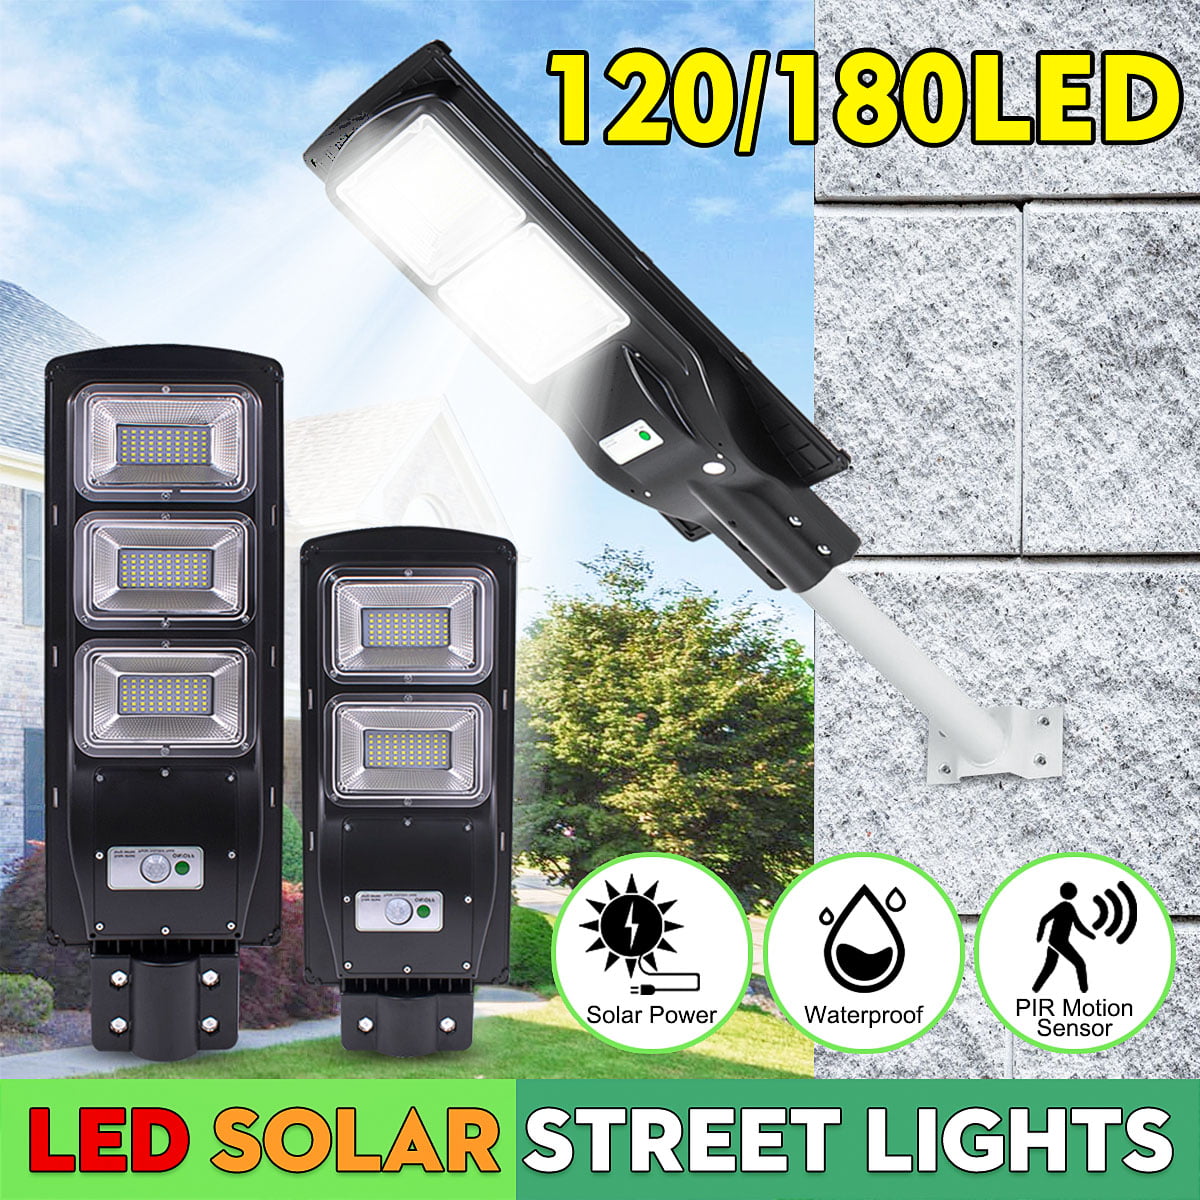 Details about   576LED 900W Solar Street Light Induction Sensor Outdoor Garden Lamp+Remote